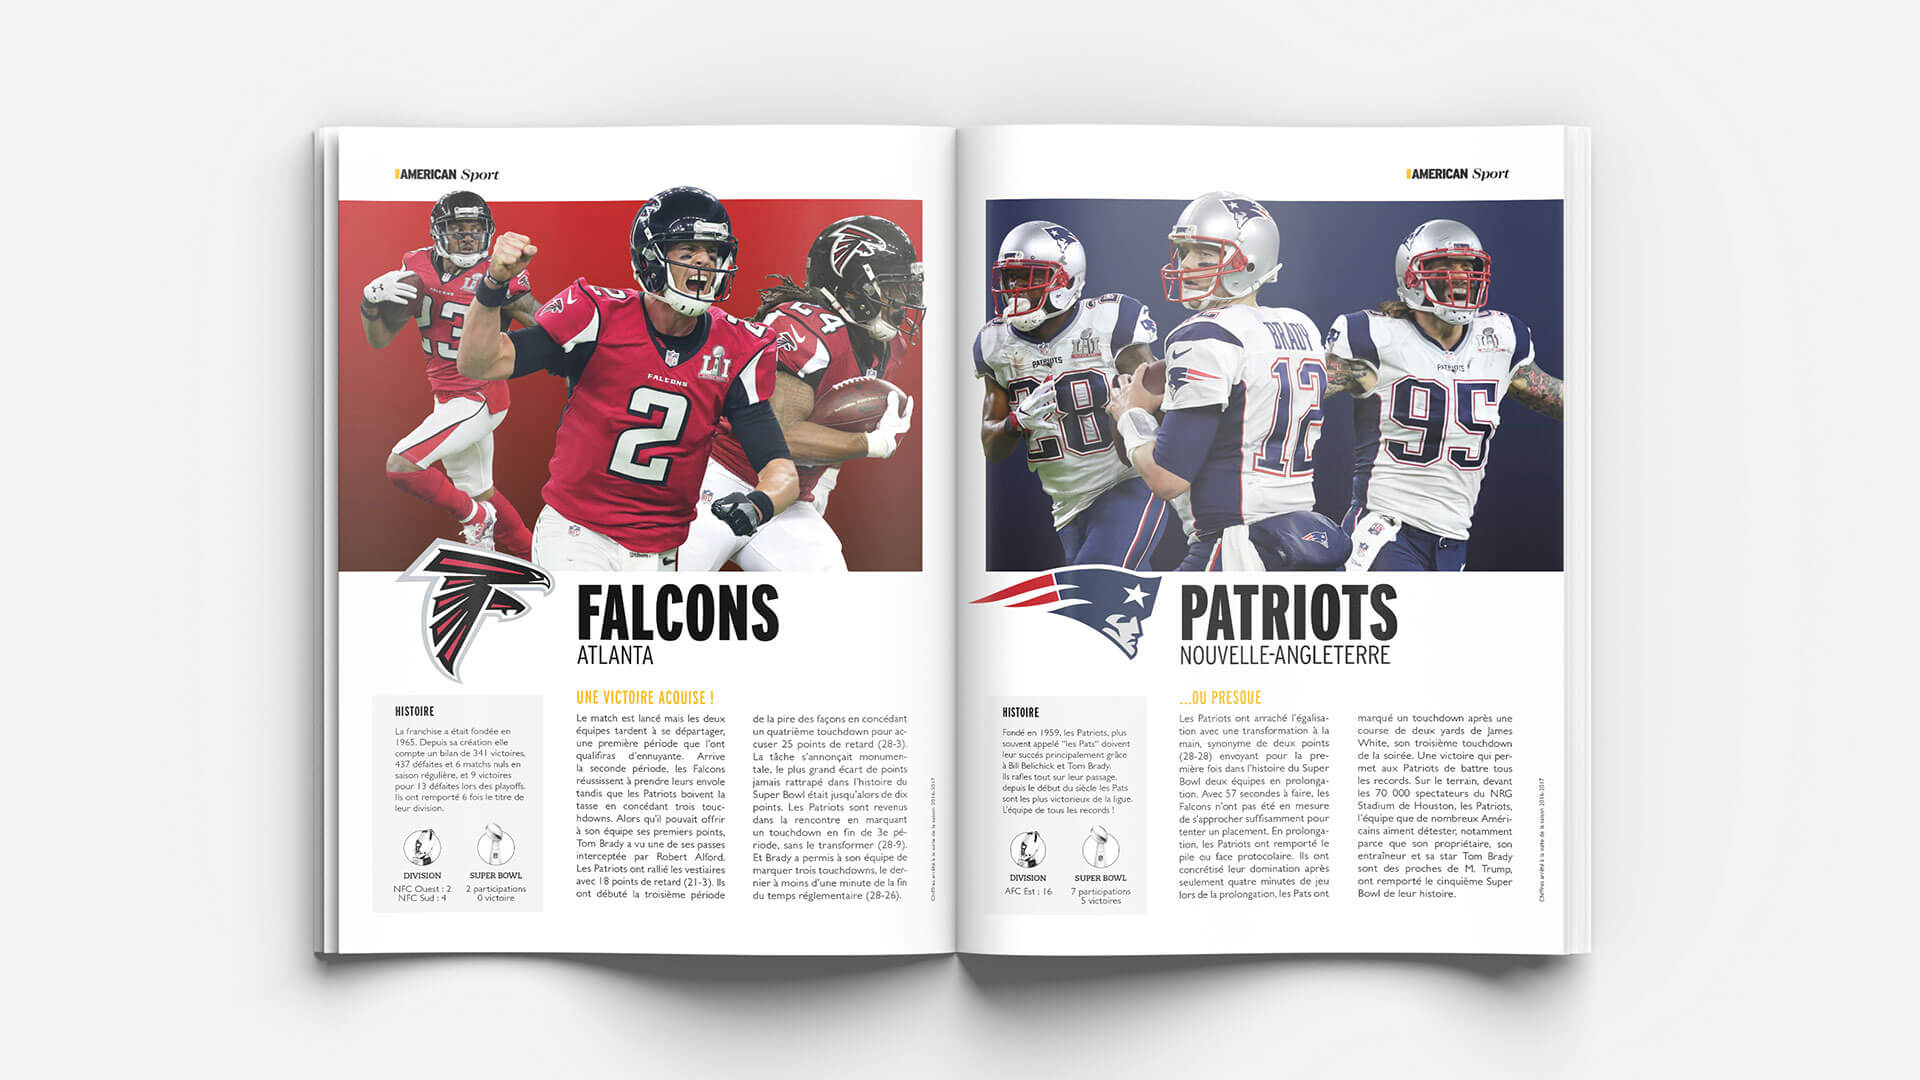 American Sport Super Bowl LI Patriots vs Falcons magazine layout